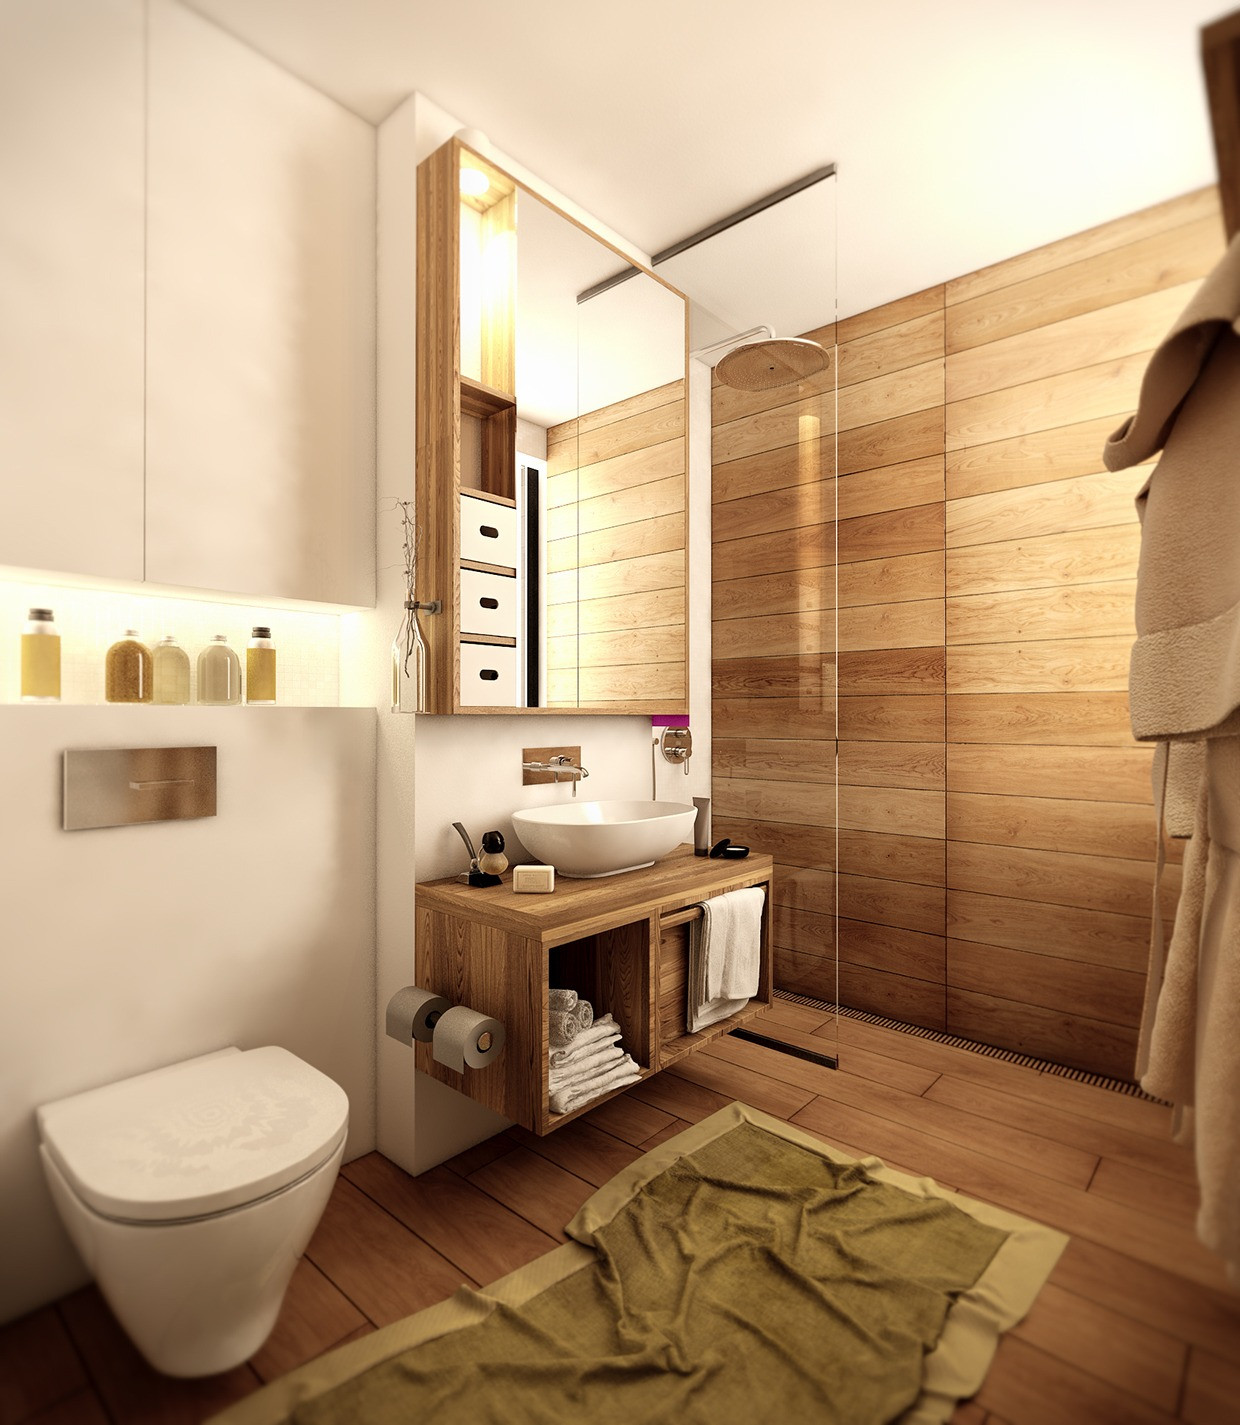 Best ideas about Wood Floor In Bathroom
. Save or Pin wood floor bathroom Now.